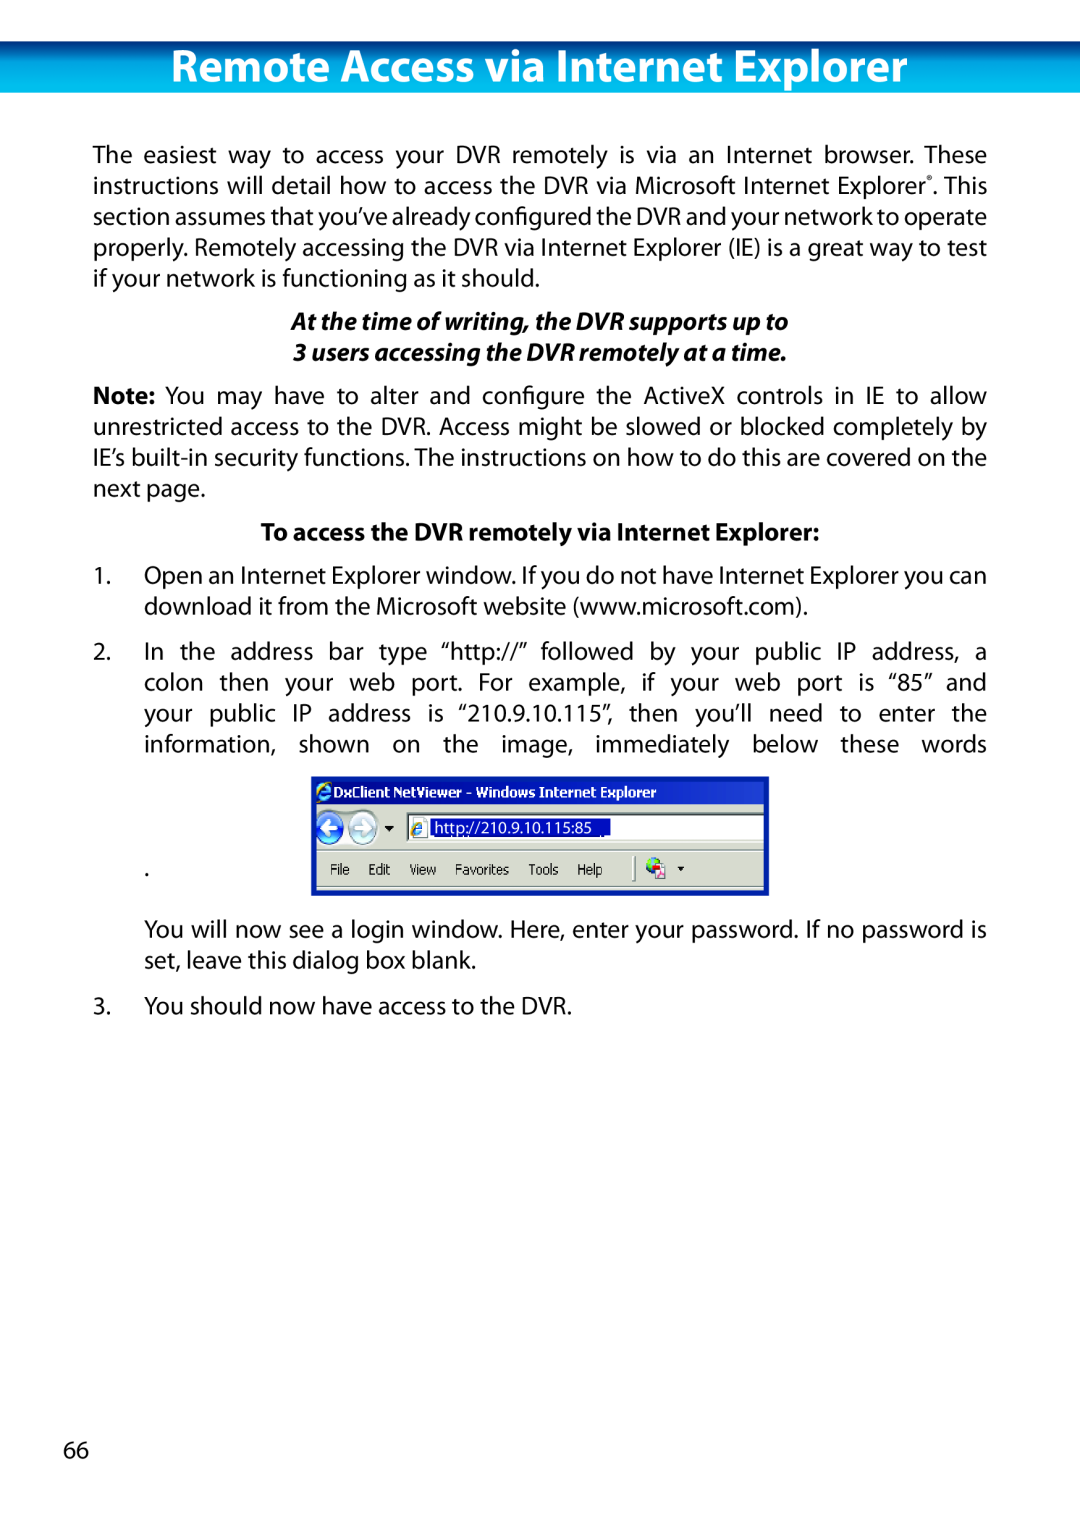 Swann H.264 manual Remote Access via Internet Explorer, To access the DVR remotely via Internet Explorer 